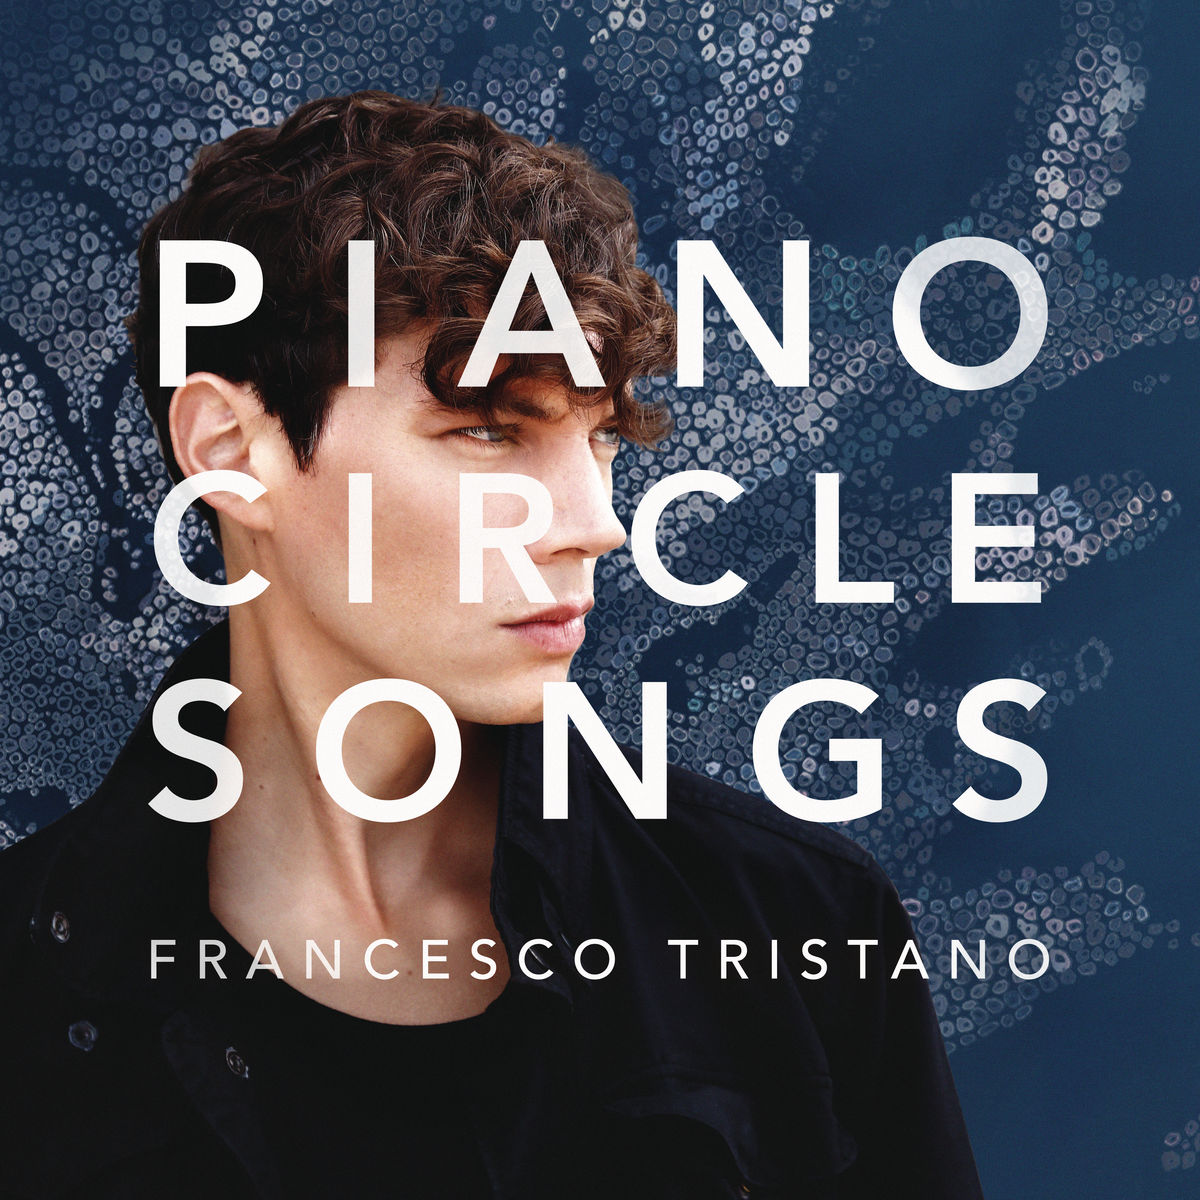 Francesco Tristano - Piano Circle Songs (2017) [Qobuz FLAC 24bit/96kHz]